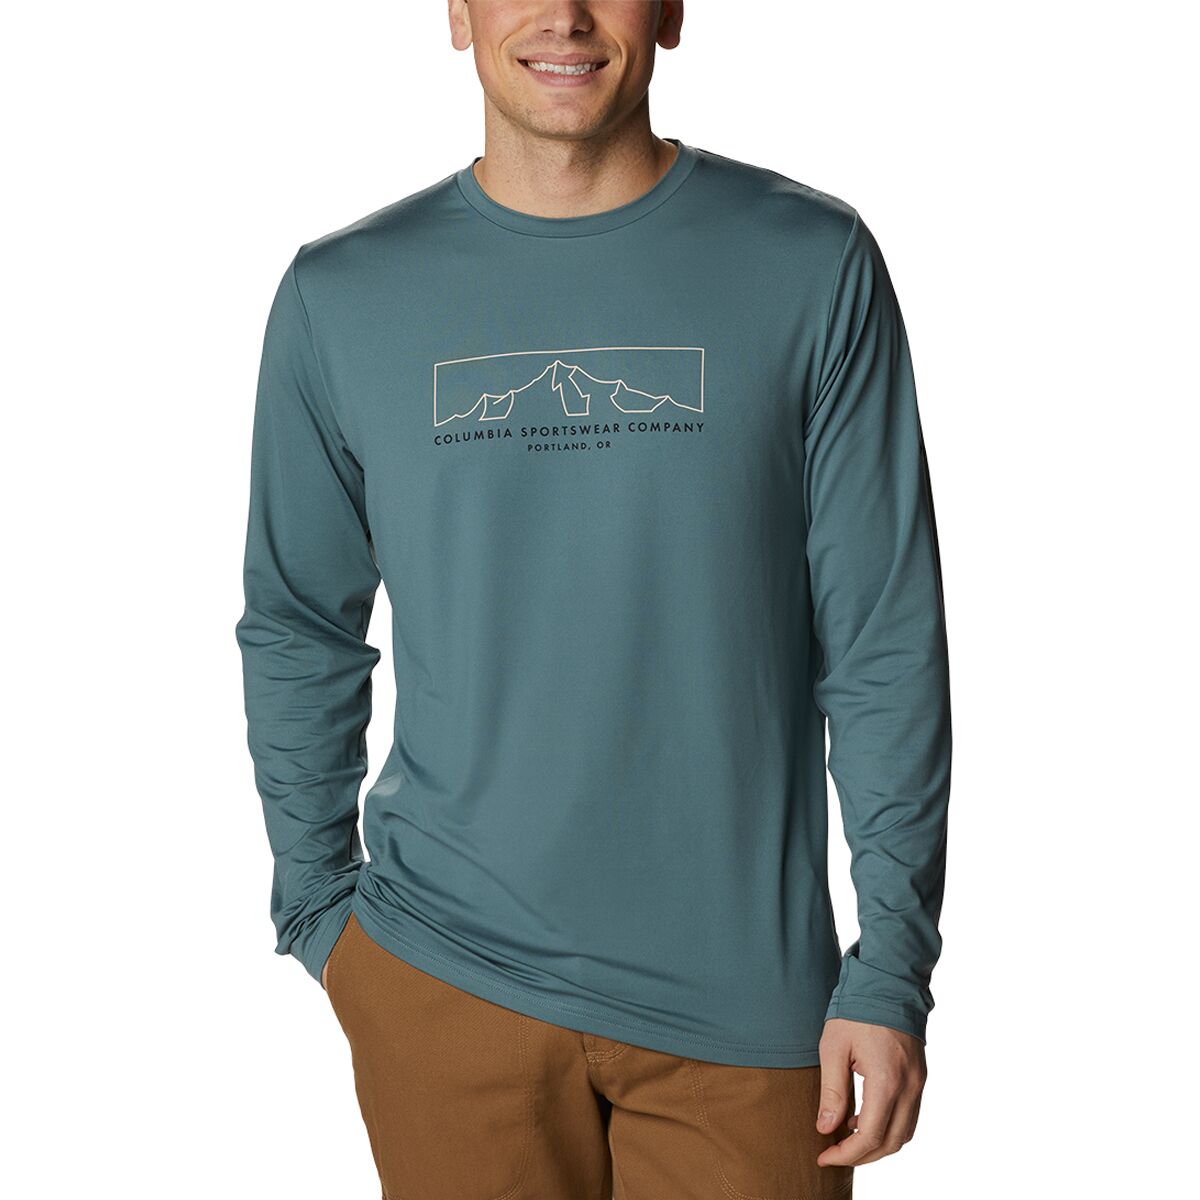 Columbia Tech Trail Graphic Long-Sleeve Shirt - Men's